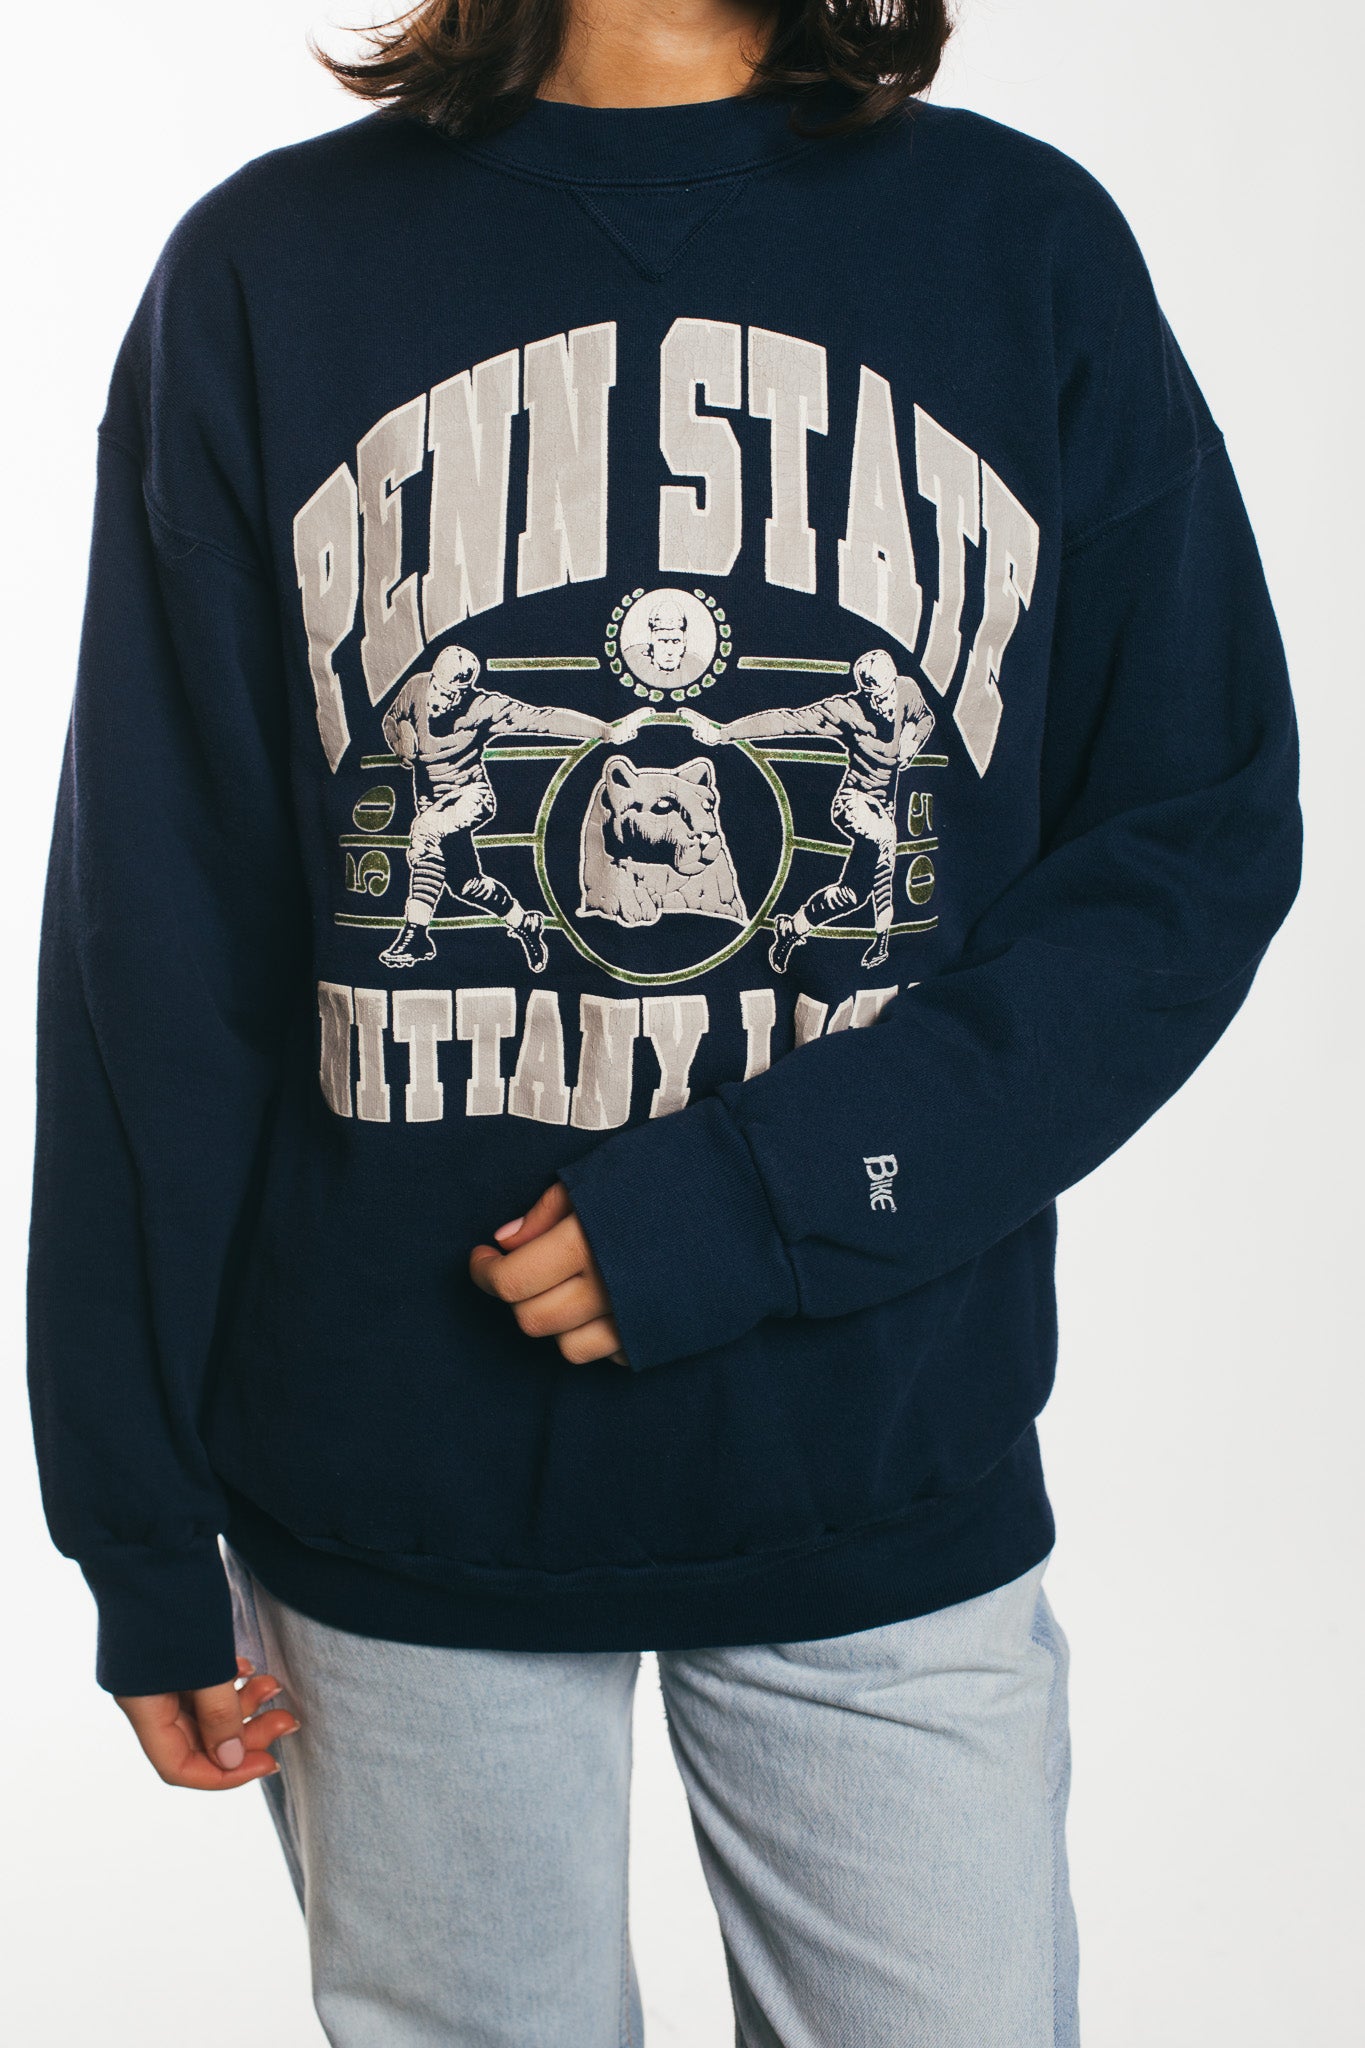 Penn State - Sweatshirt